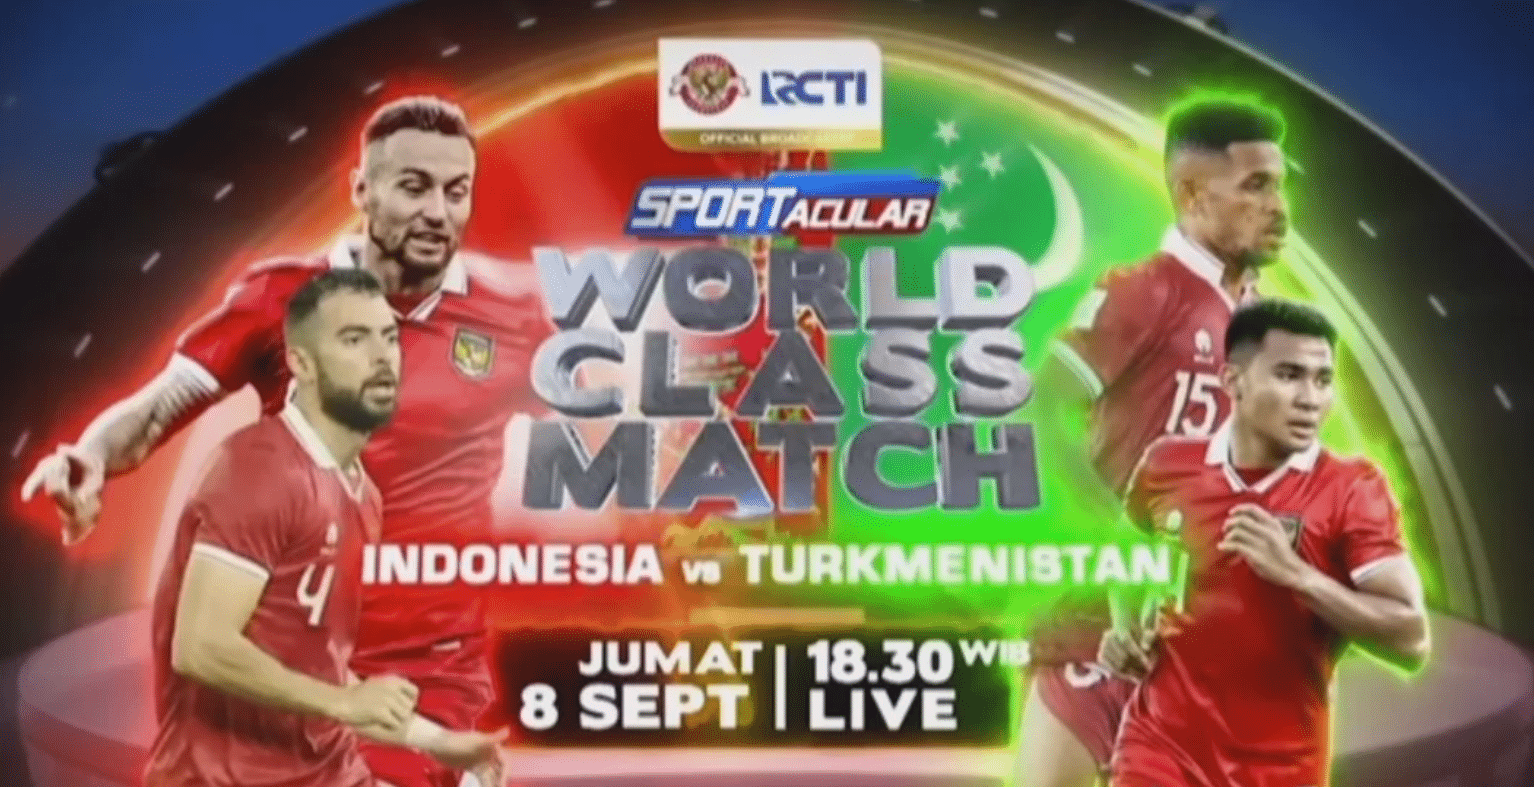 Fitur-Fitur pada aplikasi Score808 Live Stream Sports Indonesia vs Turkmenistan